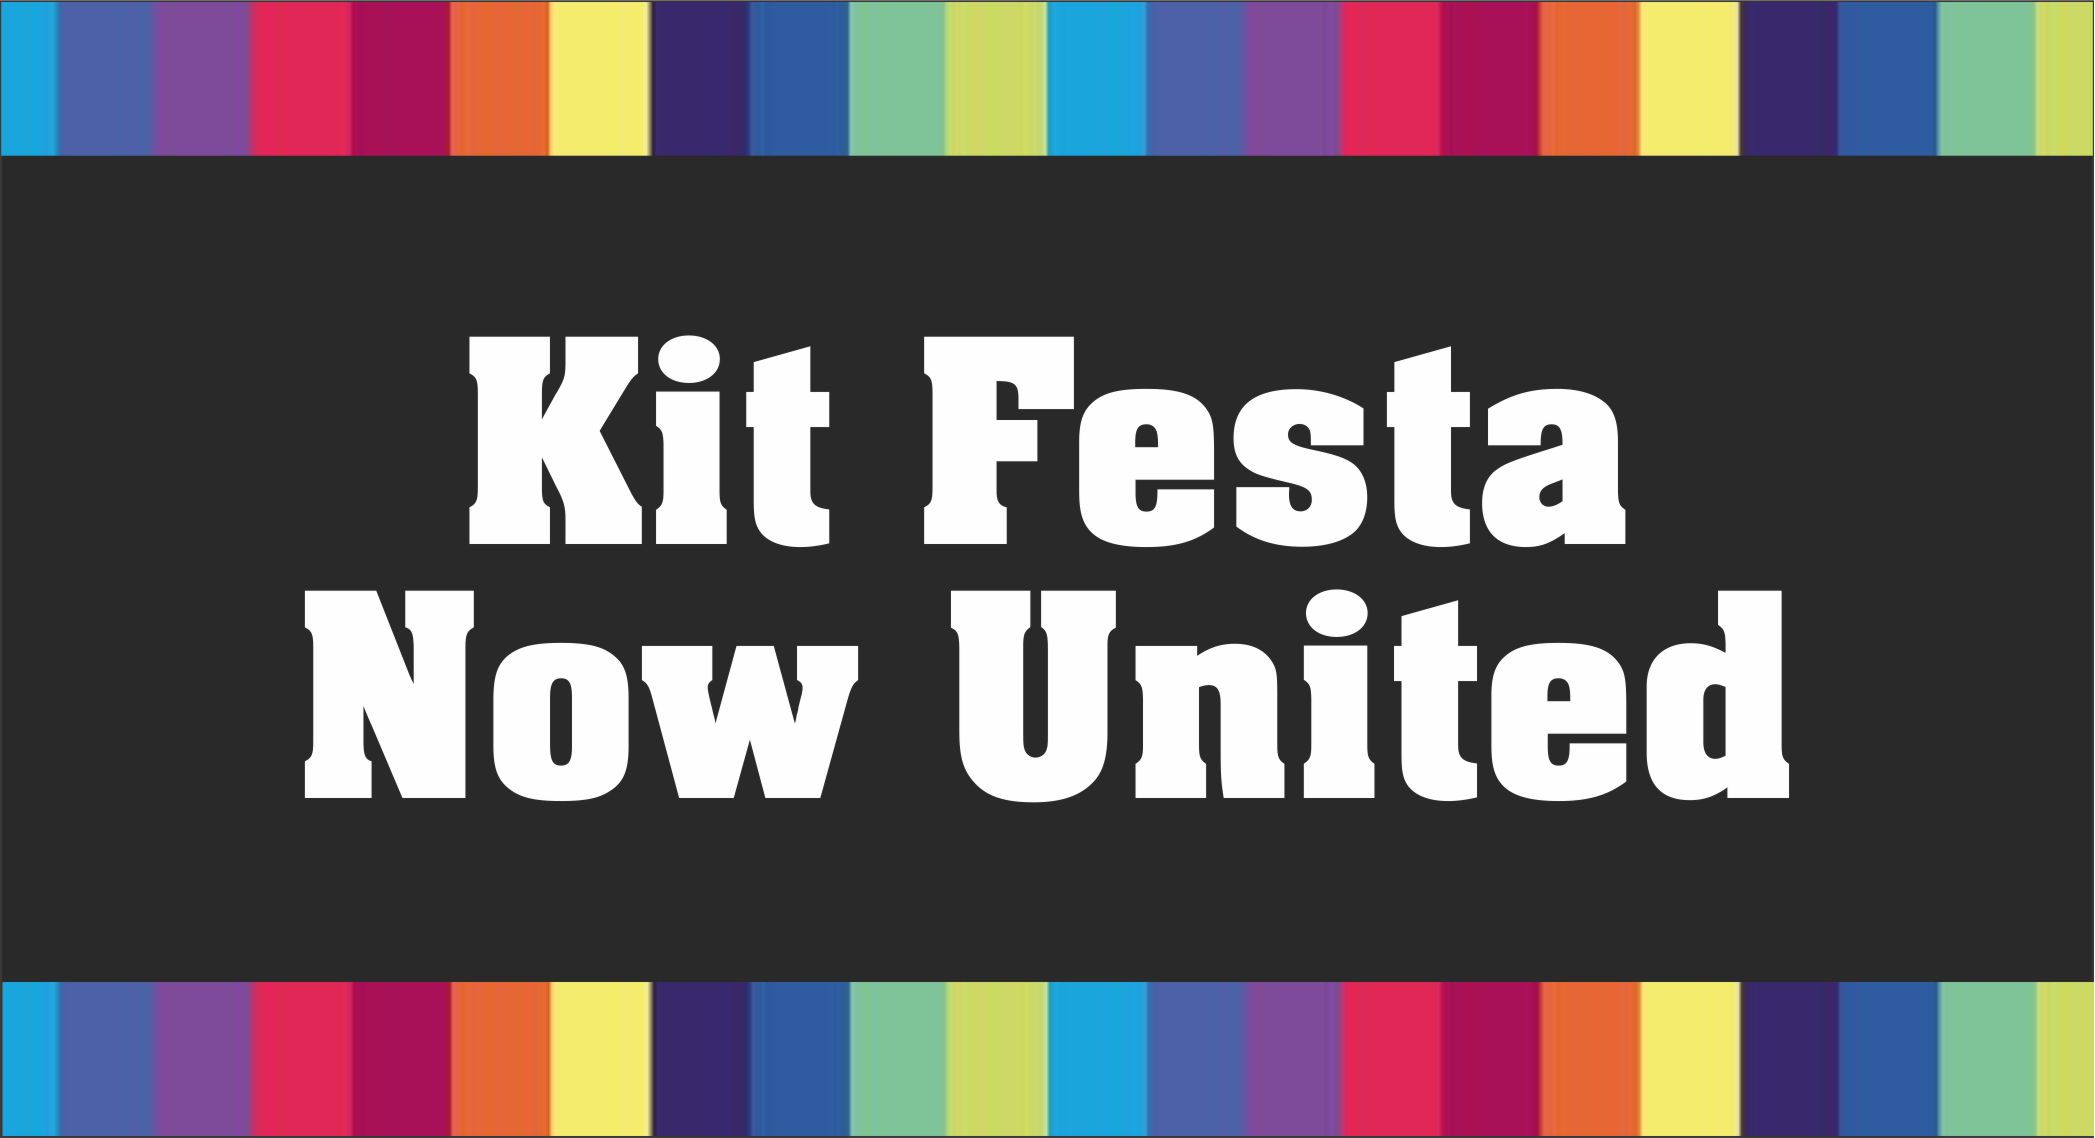 CAPA KIT FESTA UNITED - Kit Festa Now United Gratuito Para Imprimir